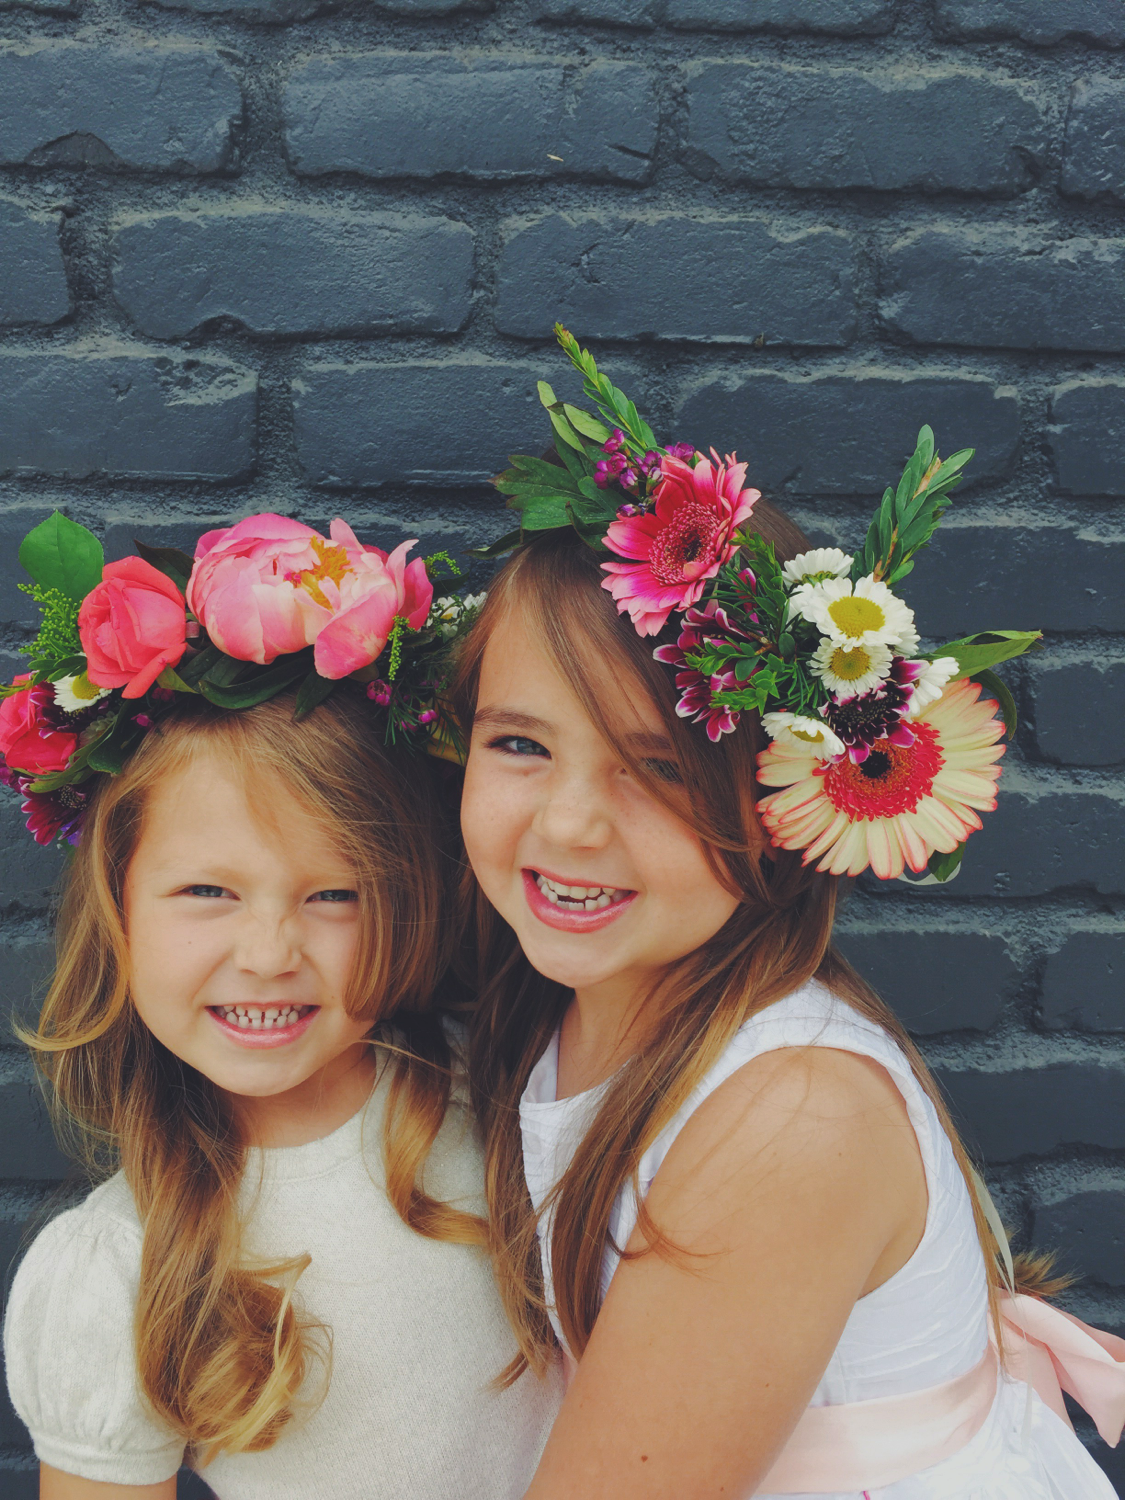 Flower girls model DIY flower crowns